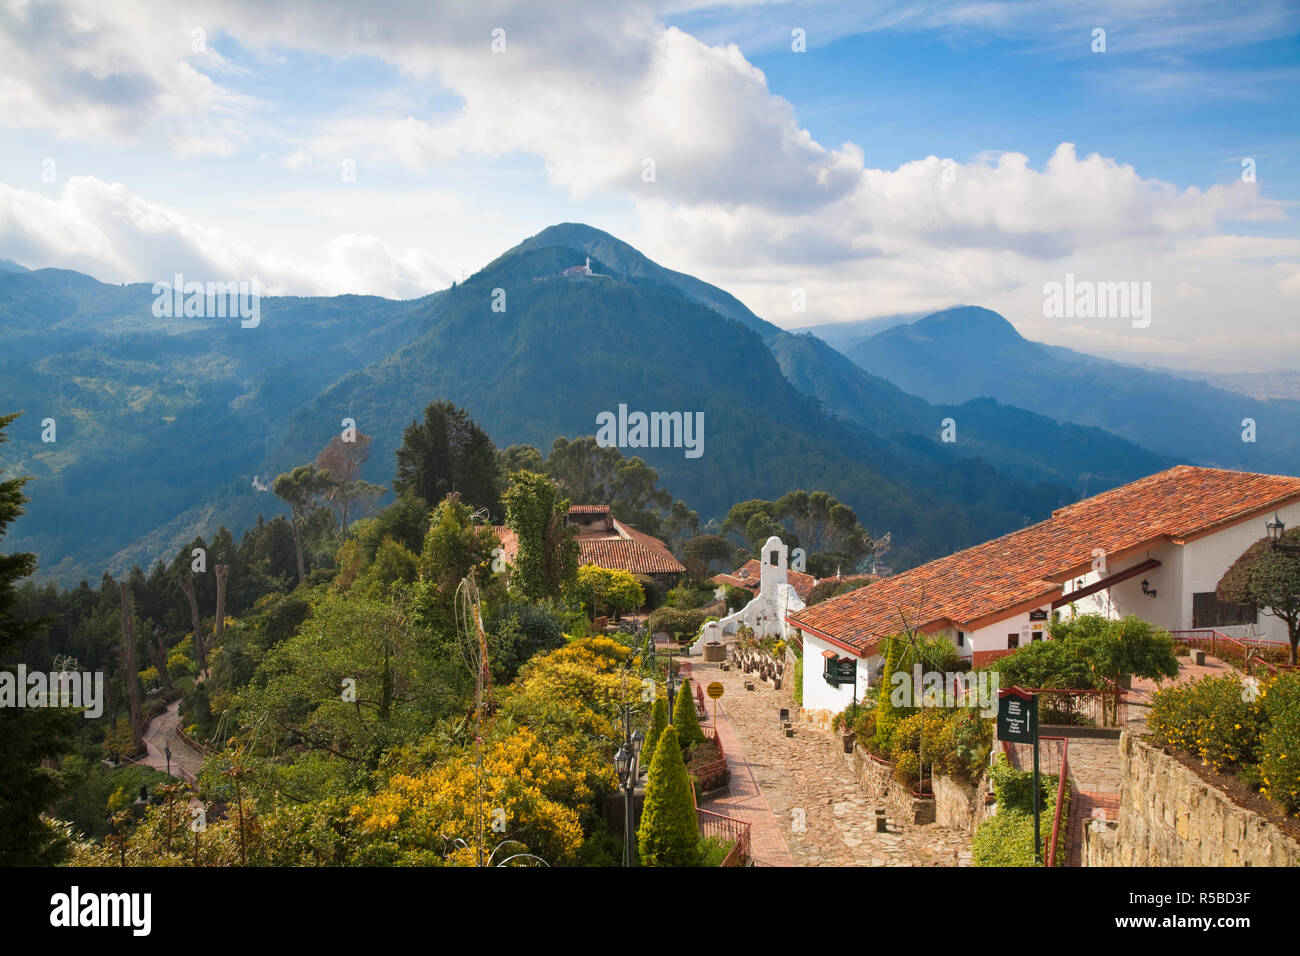 Colombia, Bogota, Cerro de Monserrate,Restaurant on Monserrate Peak Stock Photo